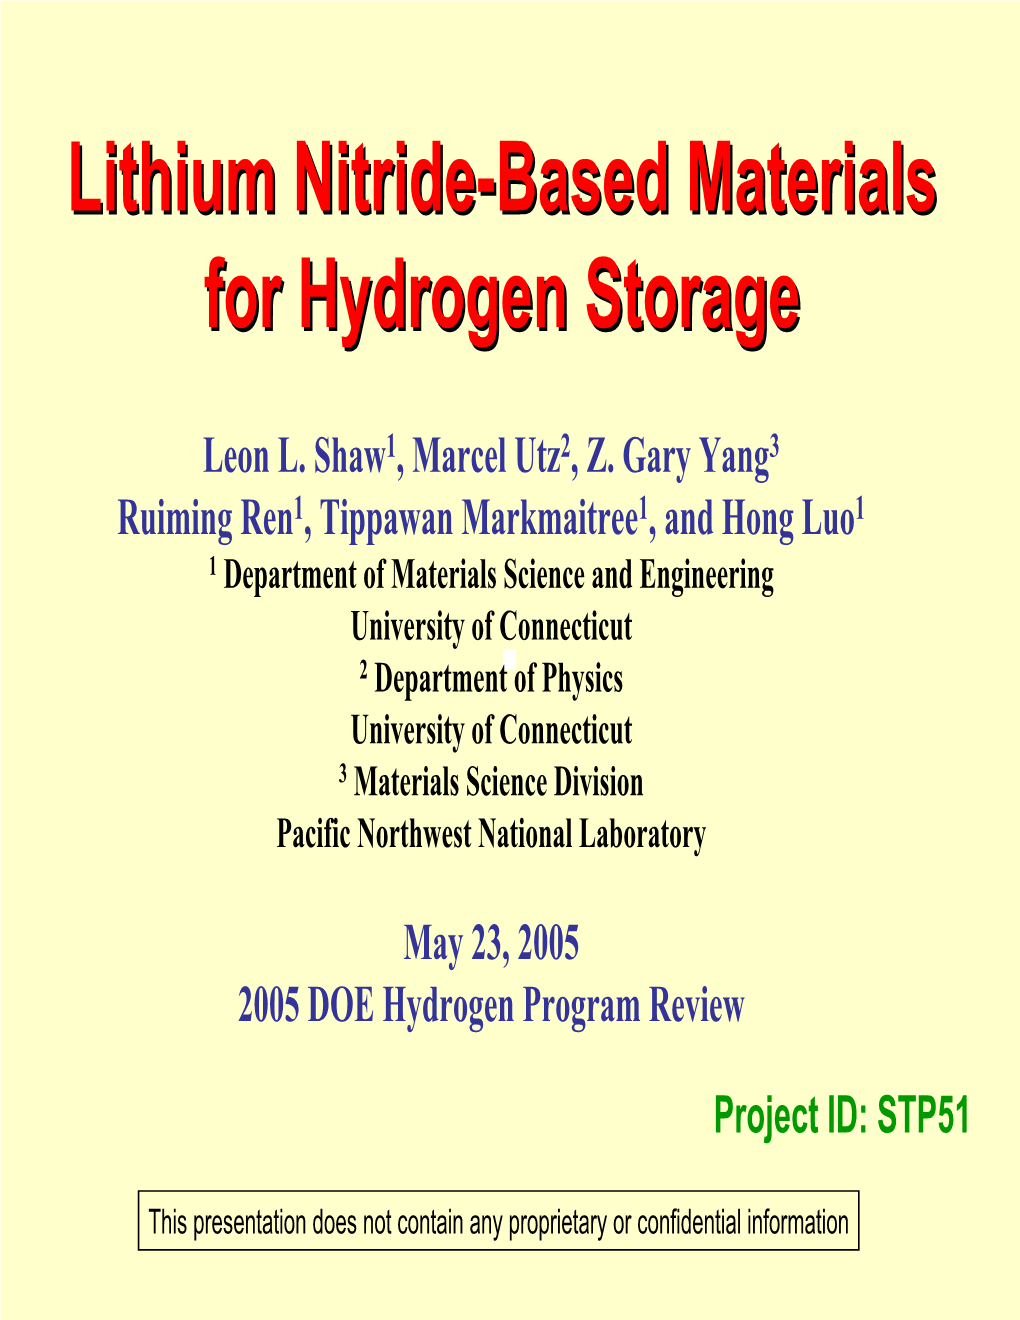 Lithium Nitride-Based Materials for Hydrogen Storage